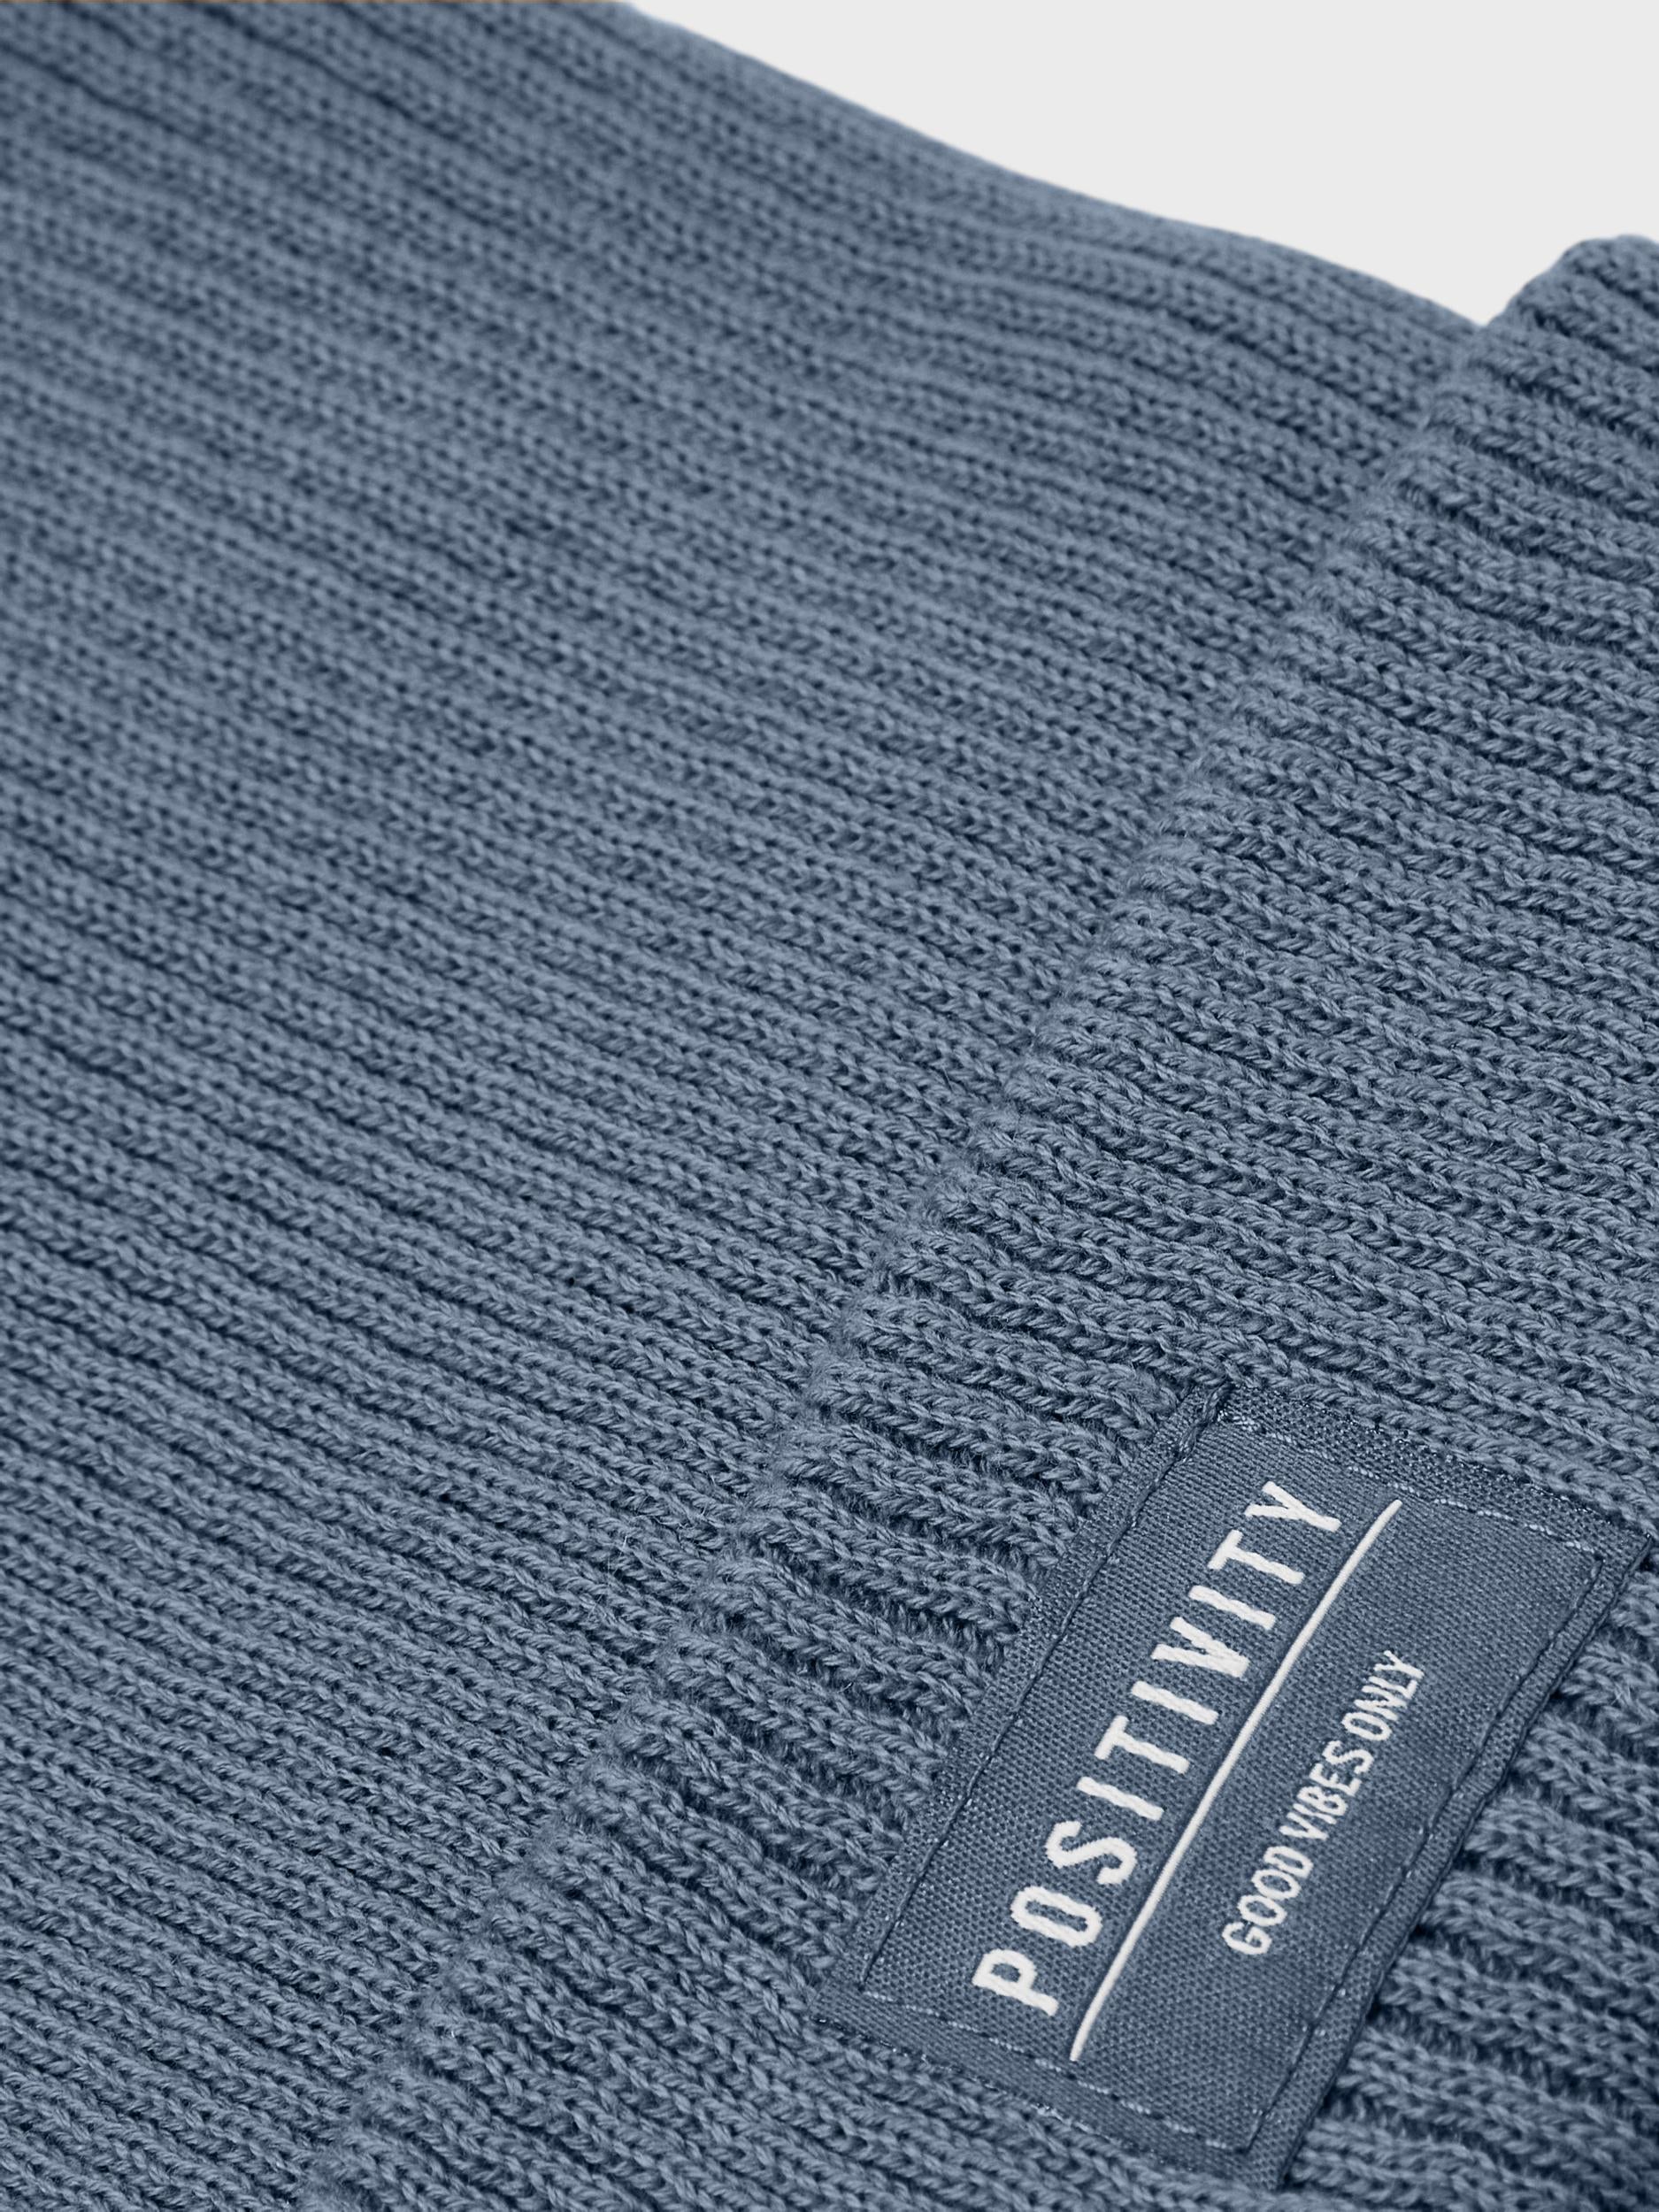 Unisex Manoa Knit Hat/China Blue-Close Up View